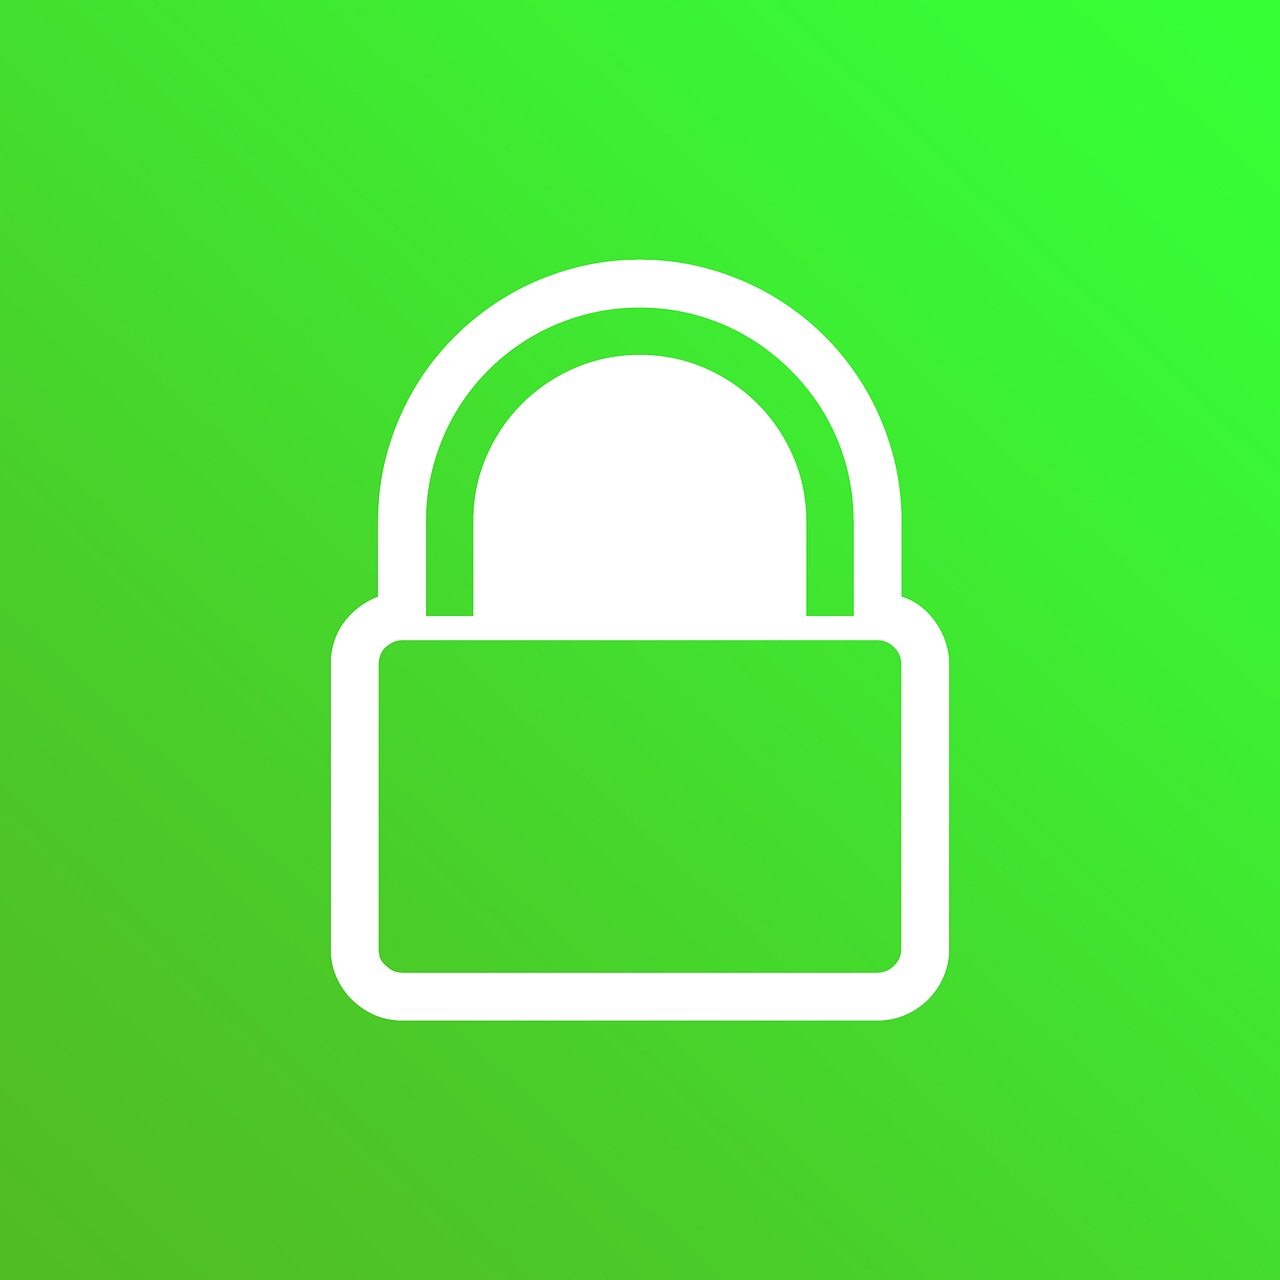 Install Let’s Encrypt Free SSL